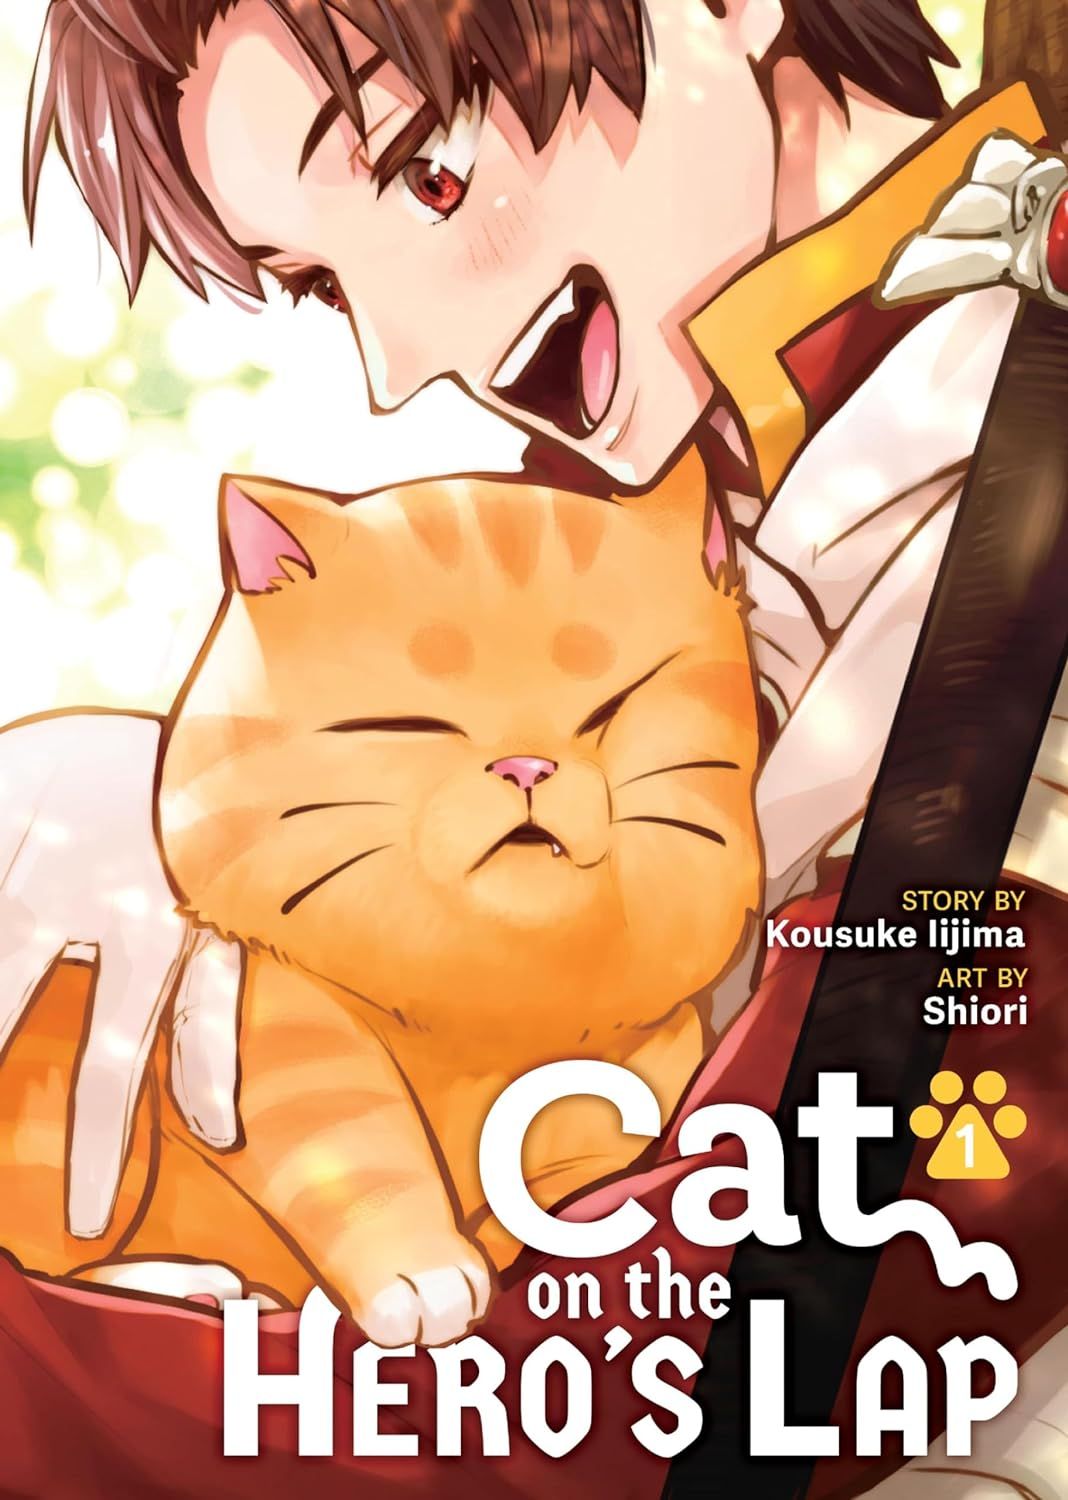 Cat on the Hero's Lap by Kousuke Iijima and Shiori cover